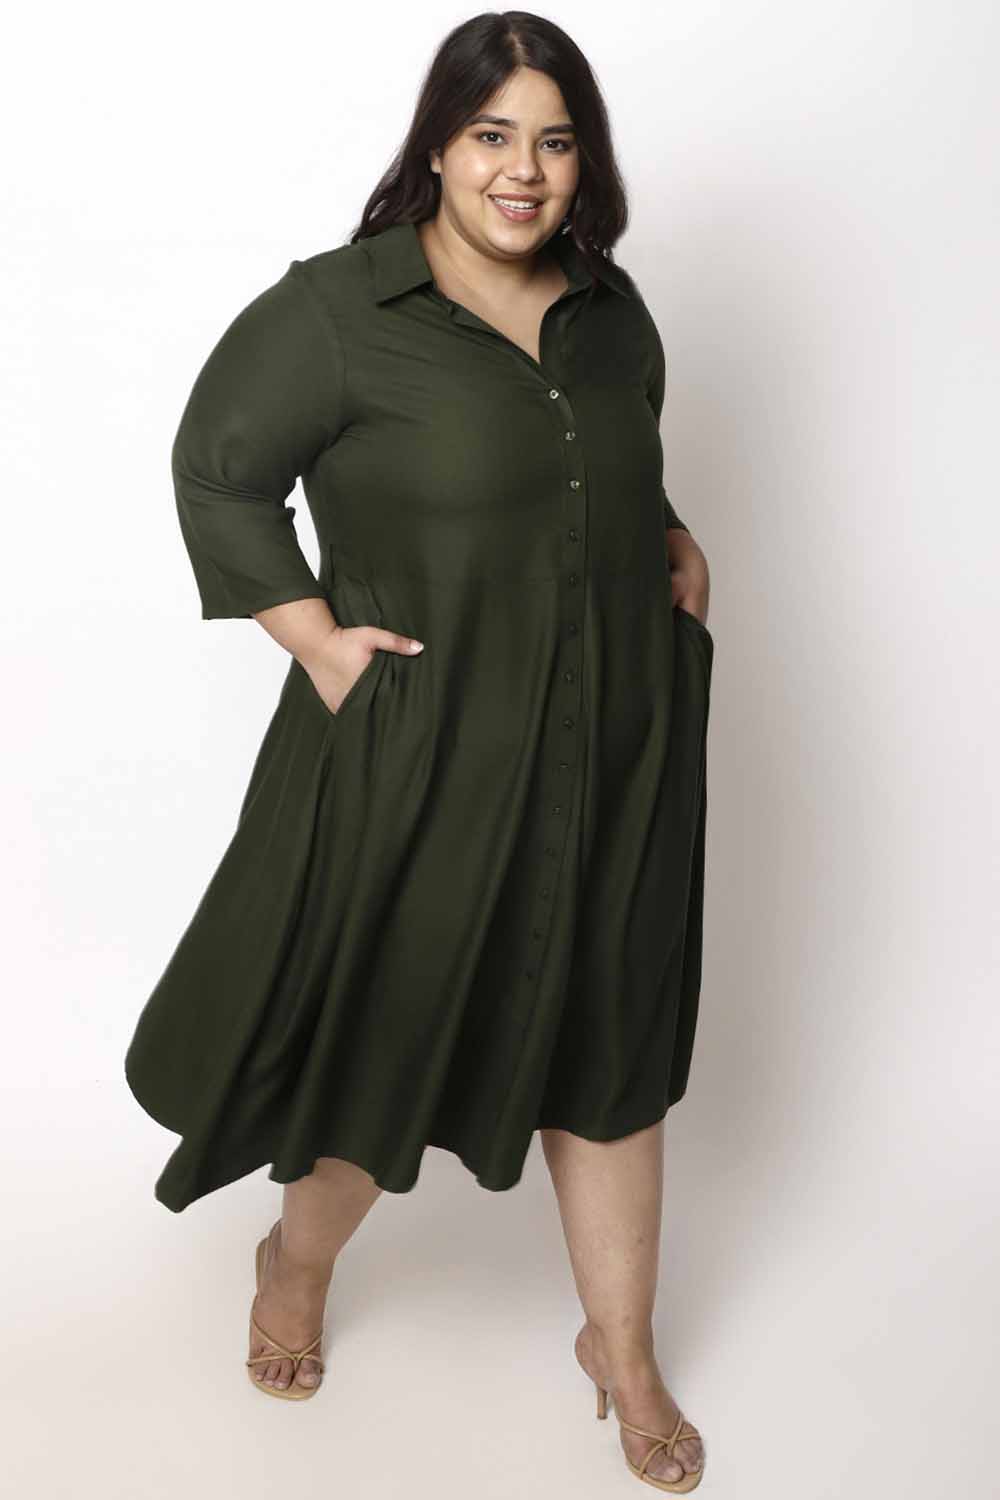 Plus Size Olive Shirt Dress